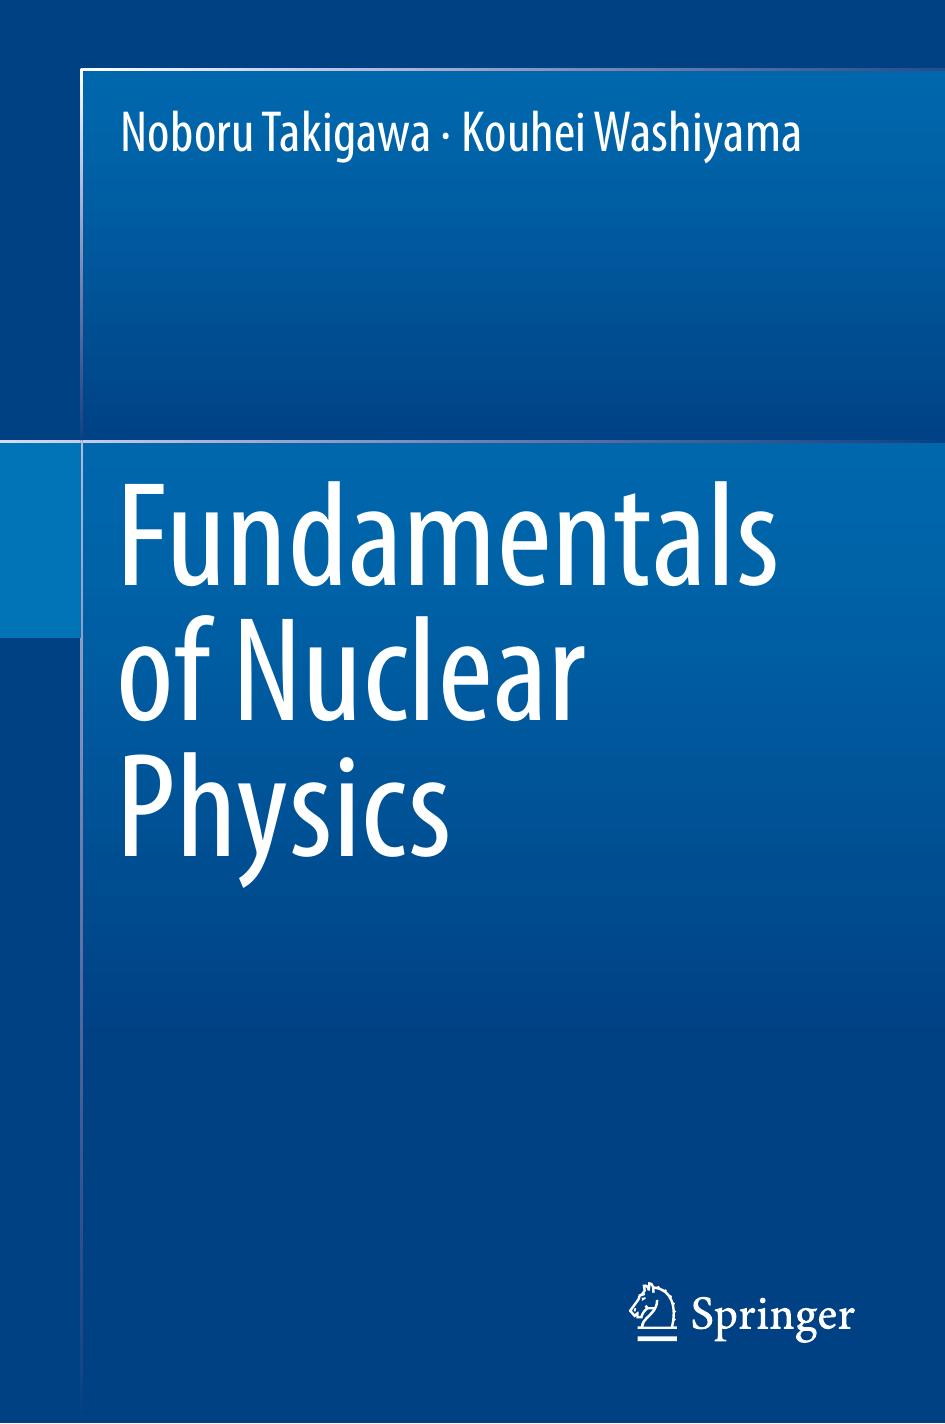 Fundamentals of nuclear physics 2017 ( PDFDrive.com )